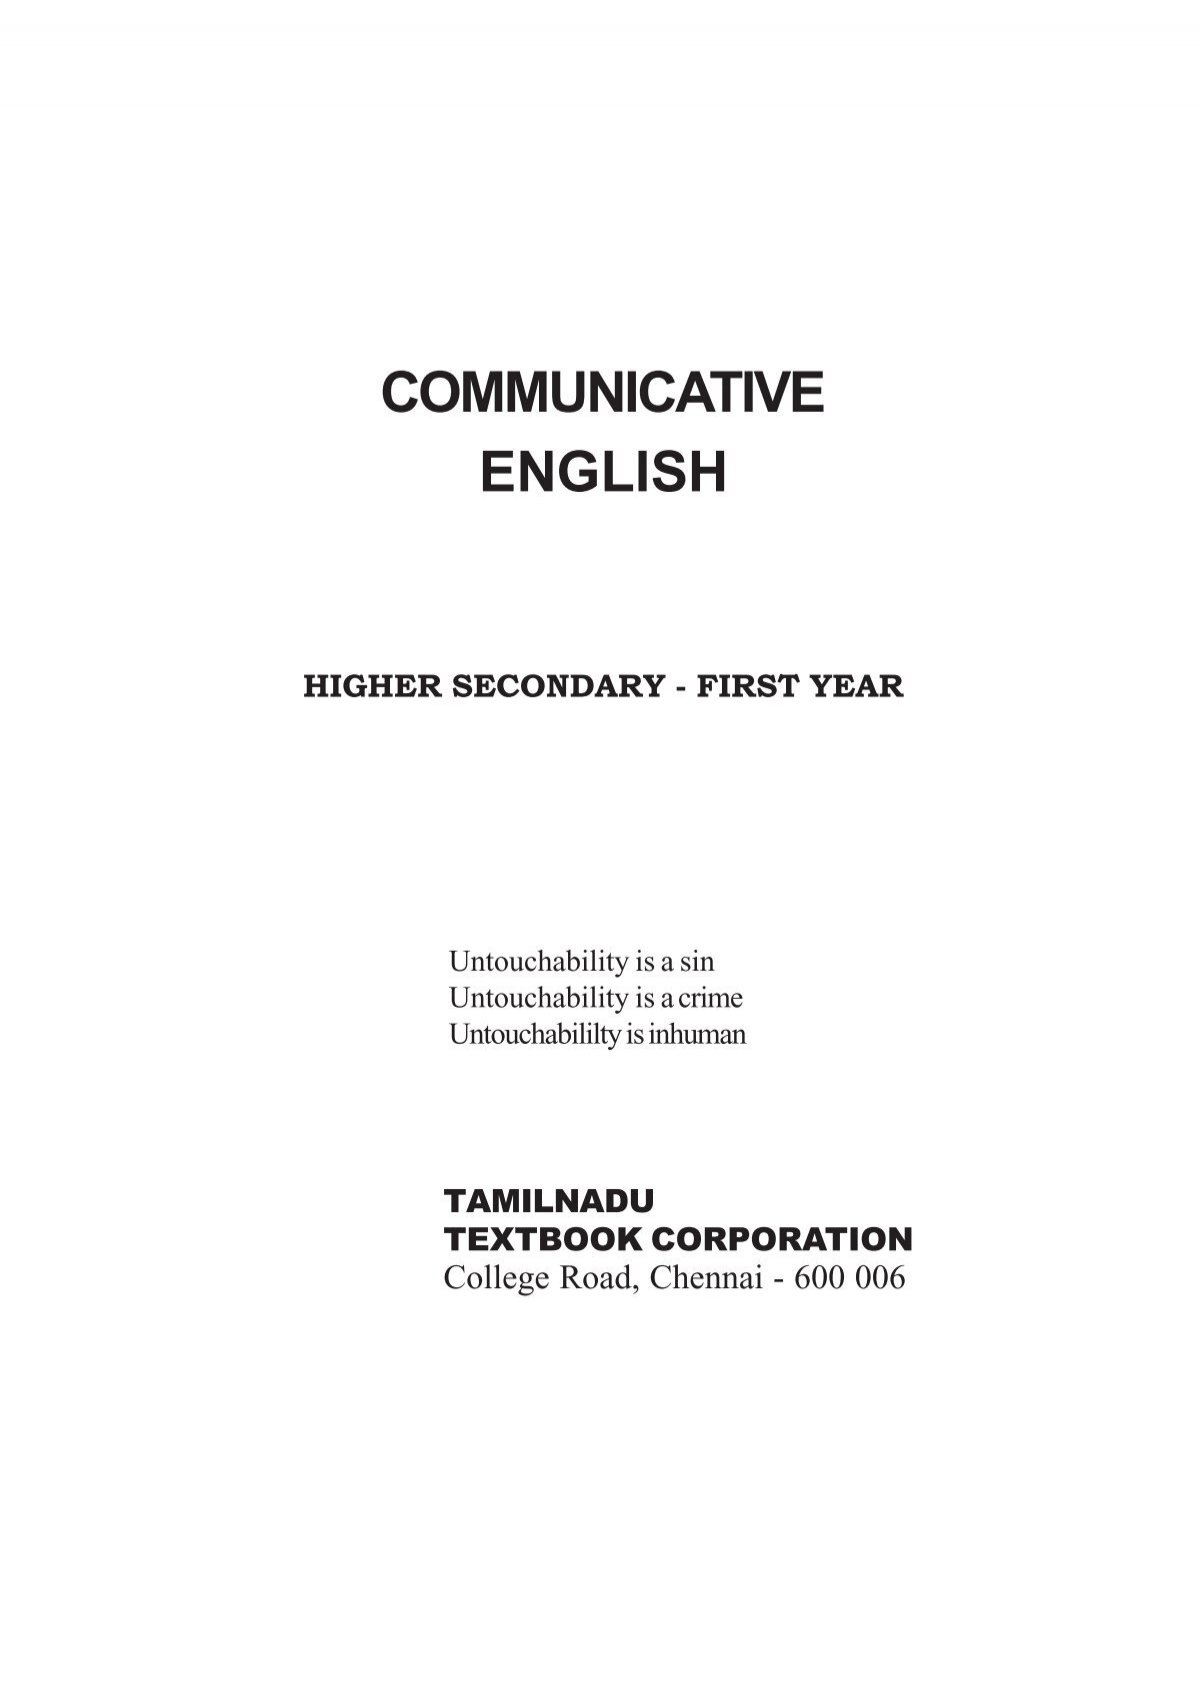 COMMUNICATIVE ENGLISH - Text Books Online